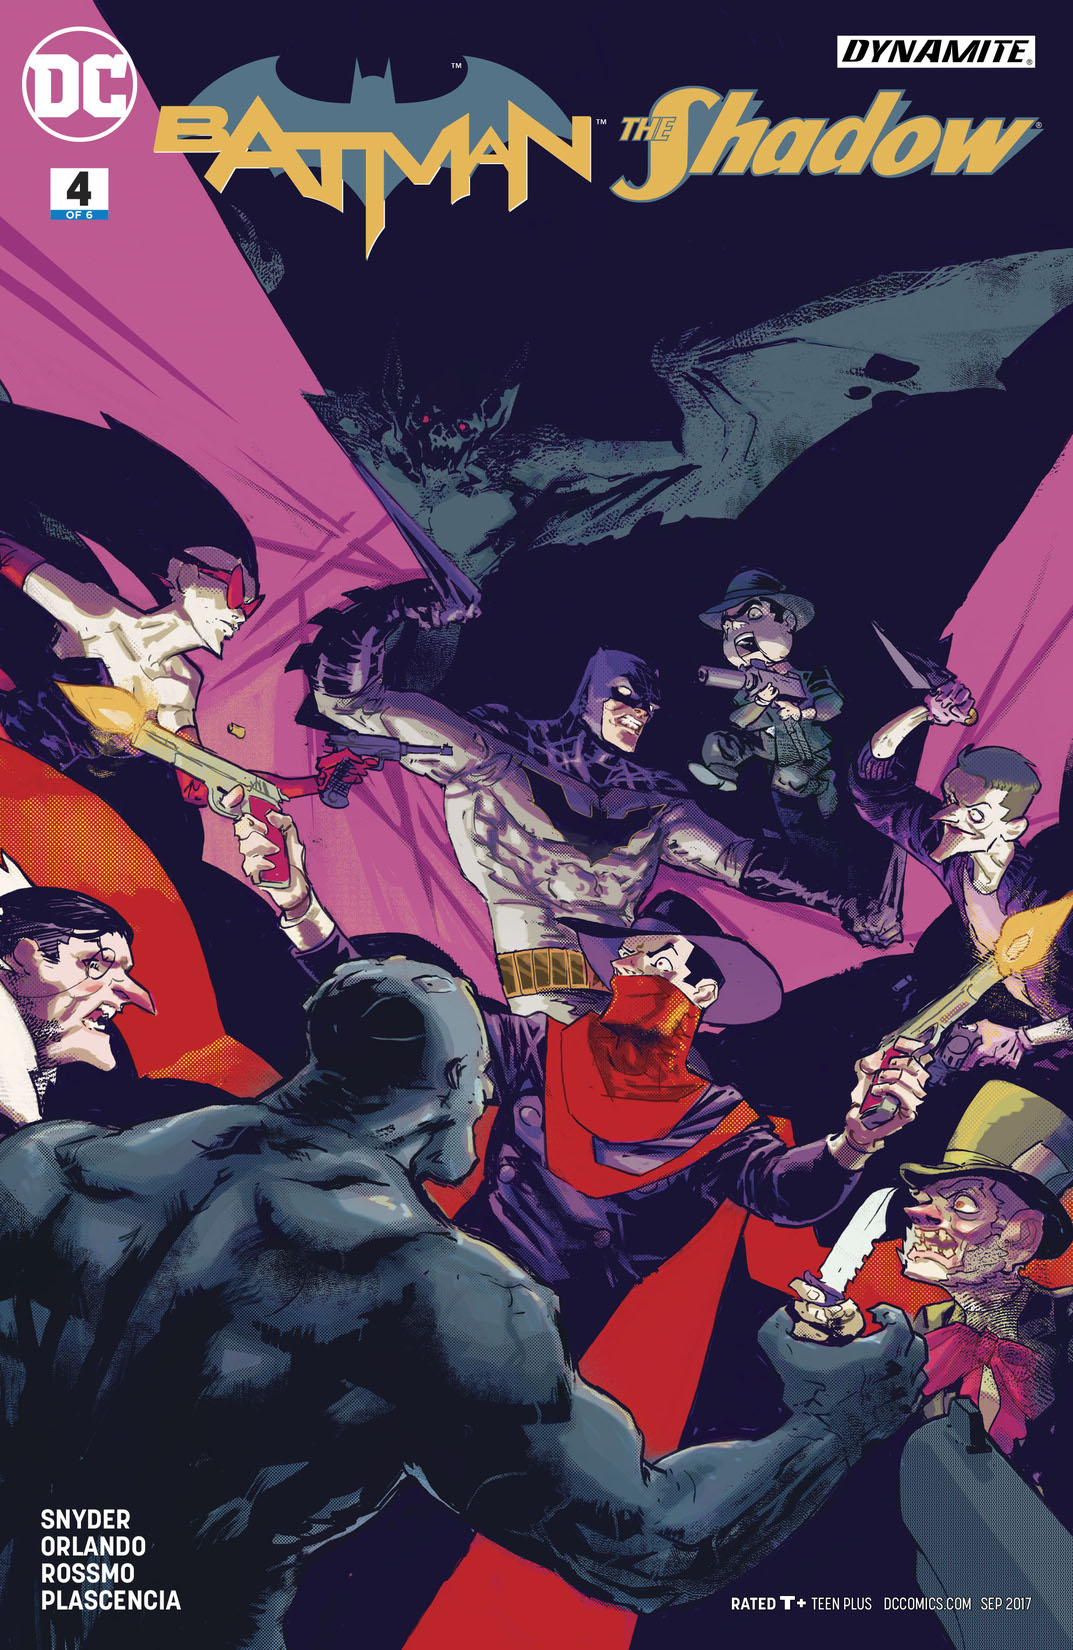 Batman/Shadow #4 preview images